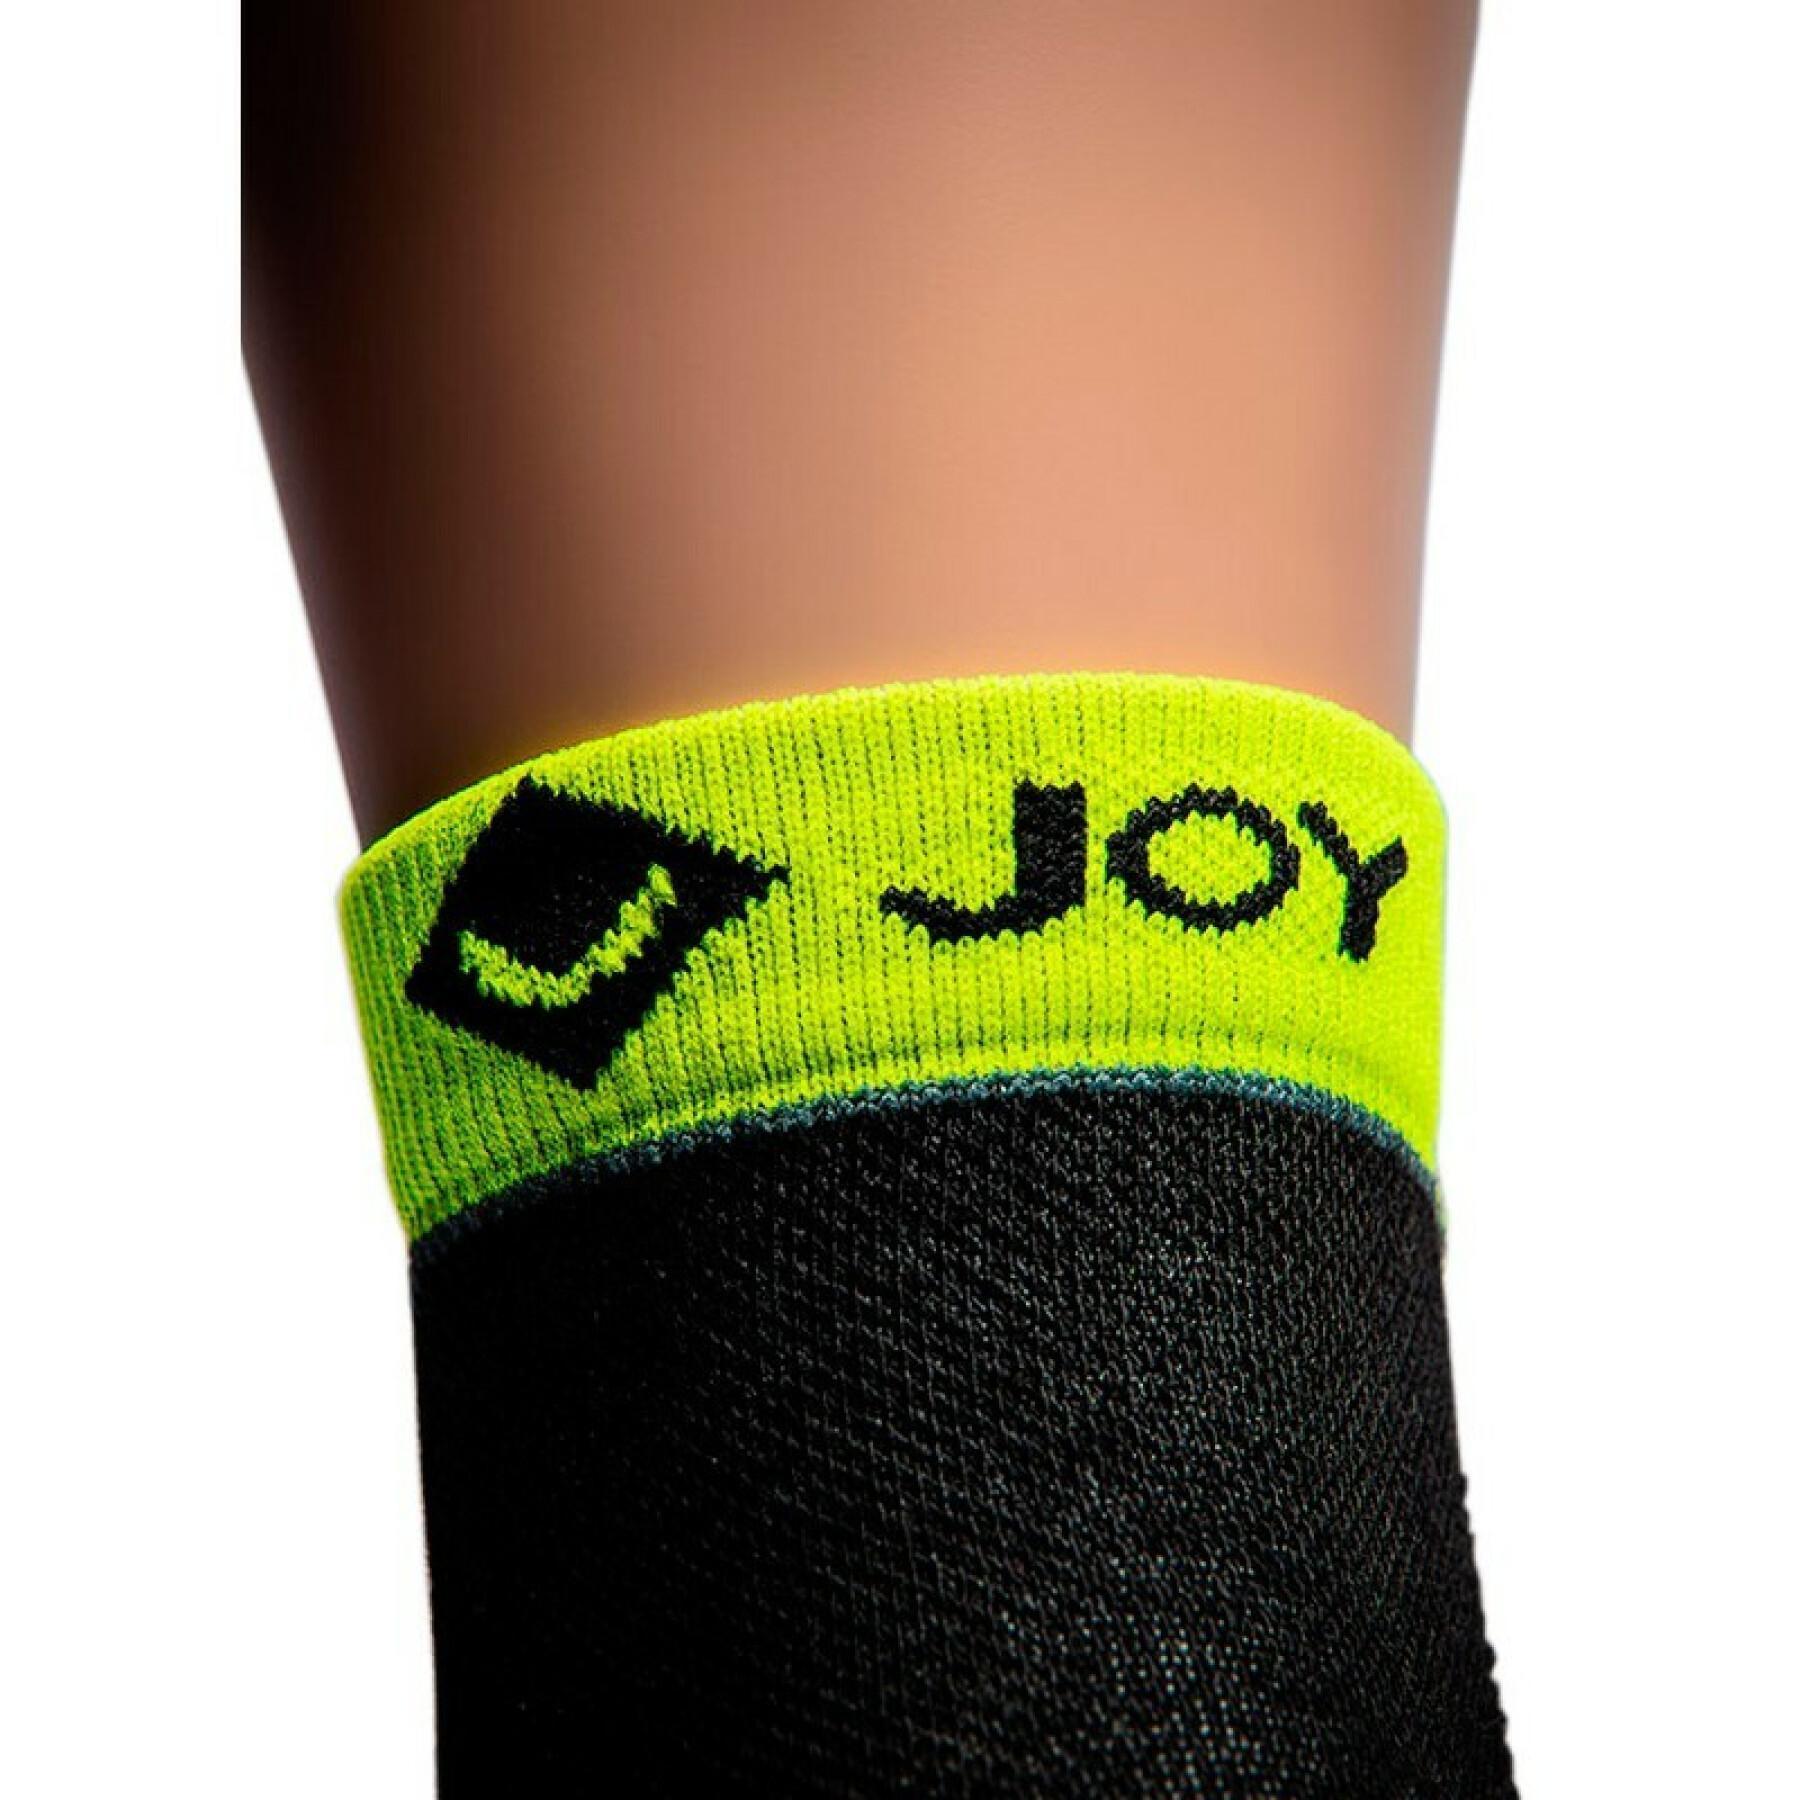 Geventileerde sokken Rywan Joy Sneakers